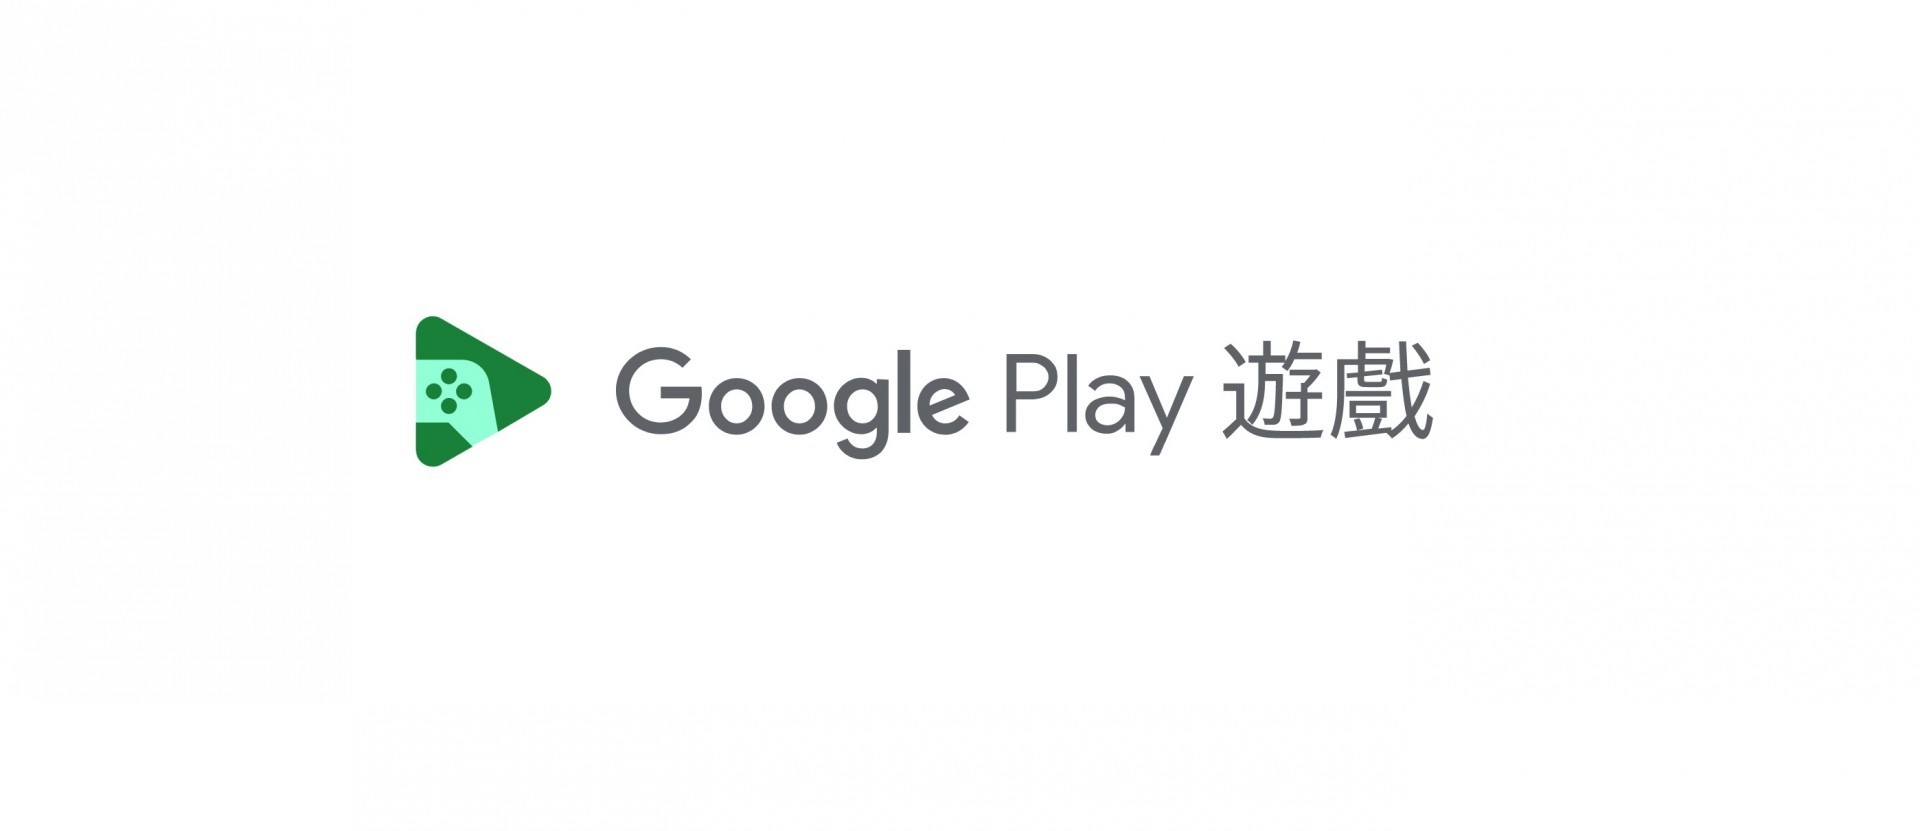 Google Play 遊戲測試版於台灣搶先推出 將對應手機、平板及 PC 並支援 20 多款作品